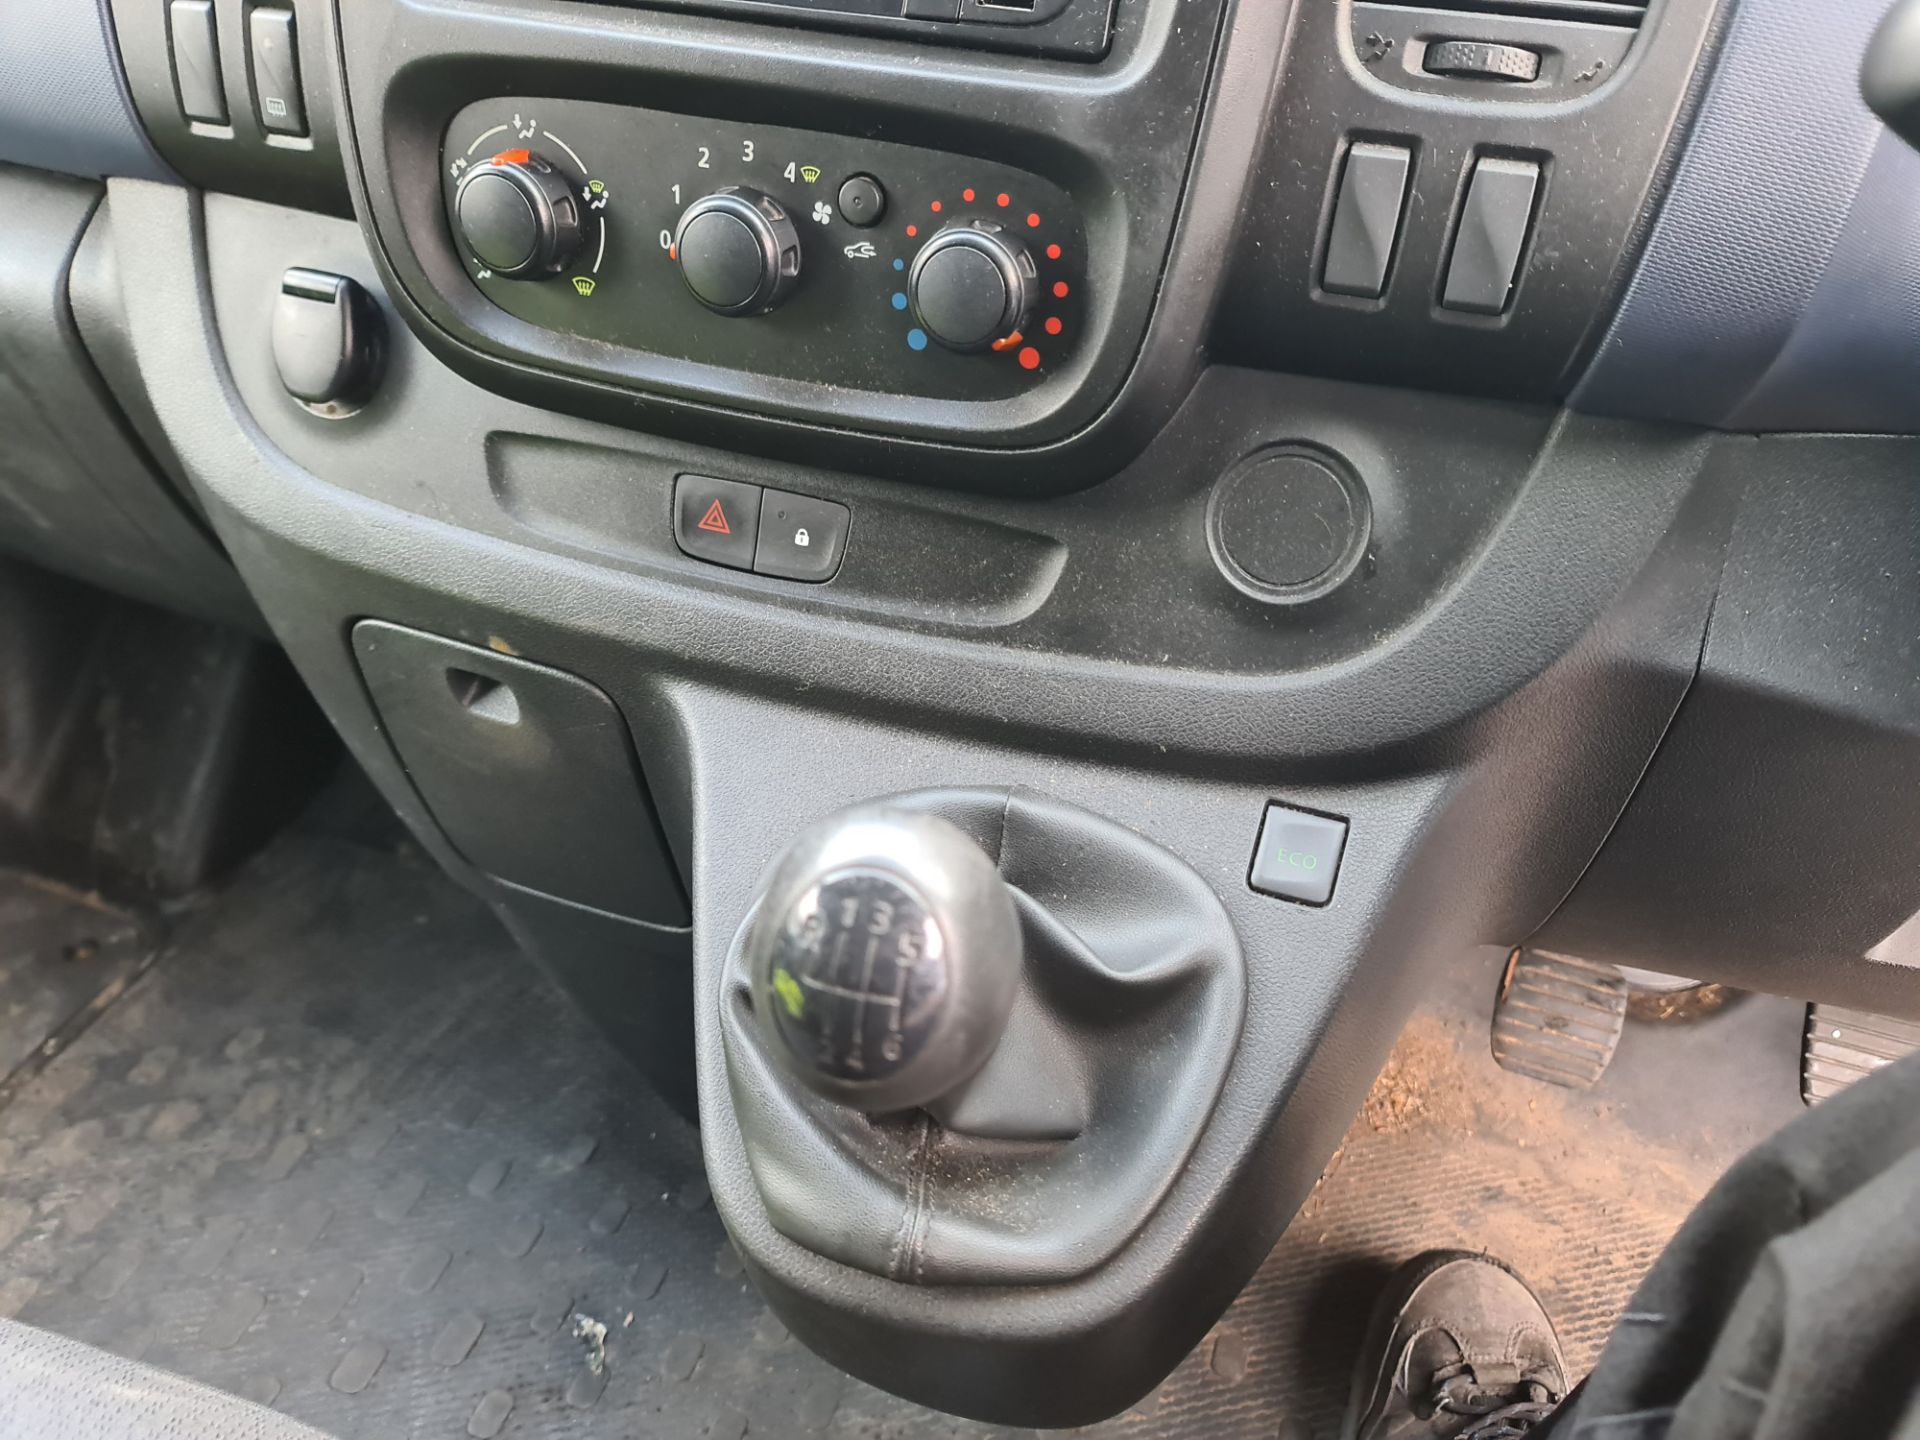 2015 Vauxhall Vivaro 2900 CDTi panel van - Image 73 of 81